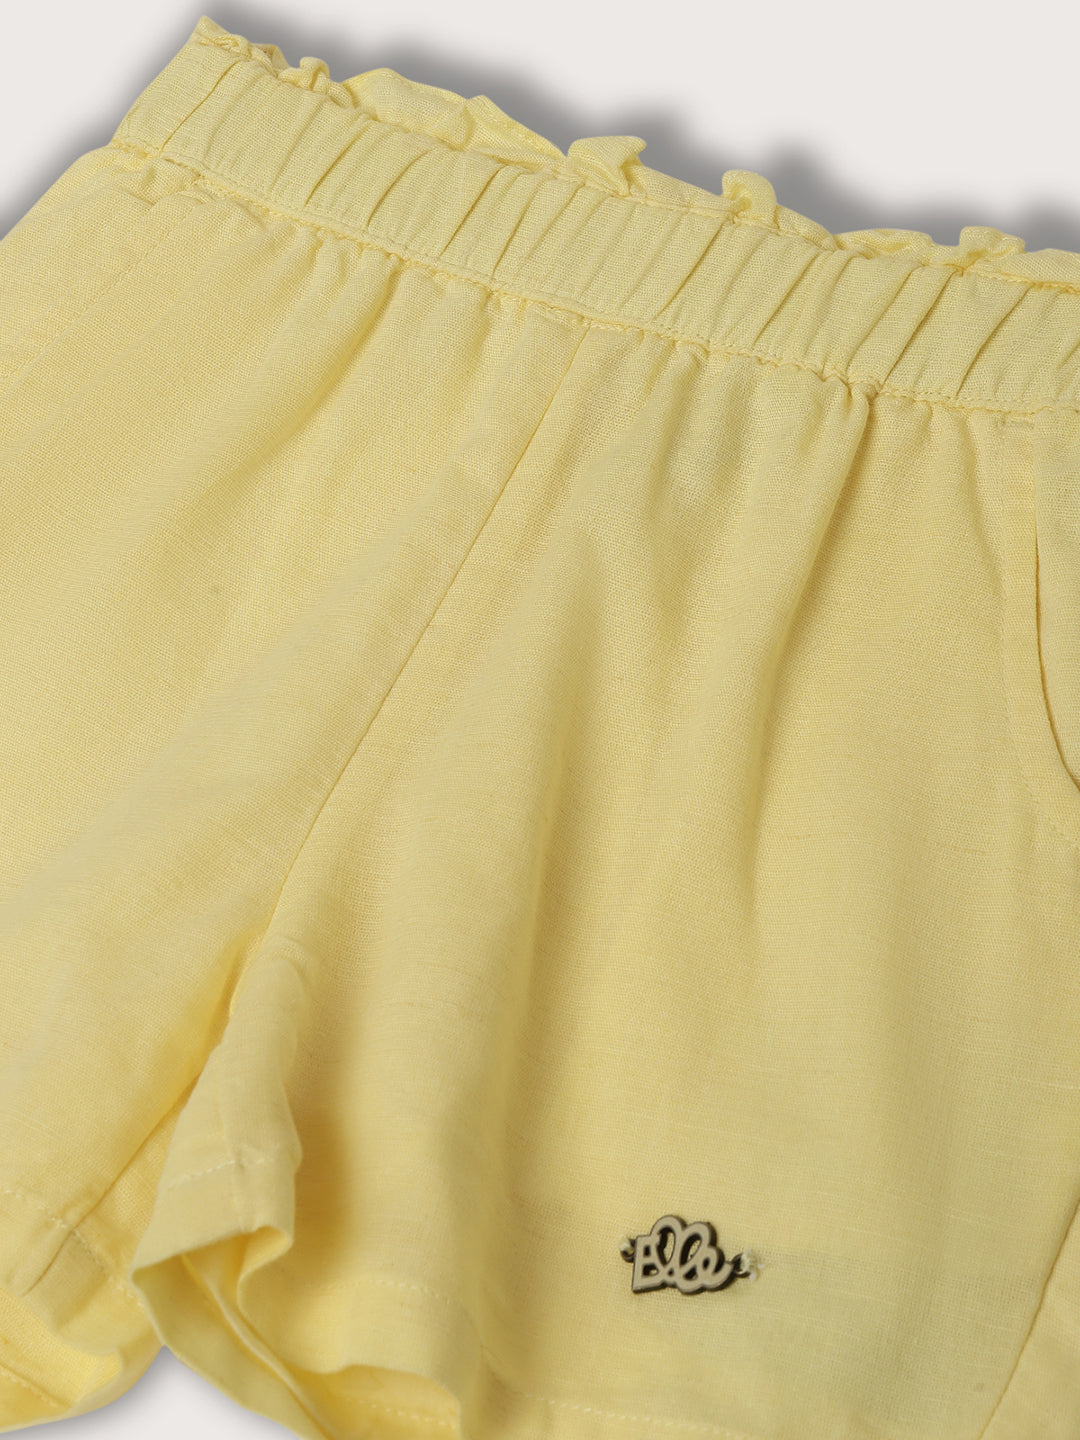 Elle Kids Girls Lemon Yellow Solid Regular Fit Shorts